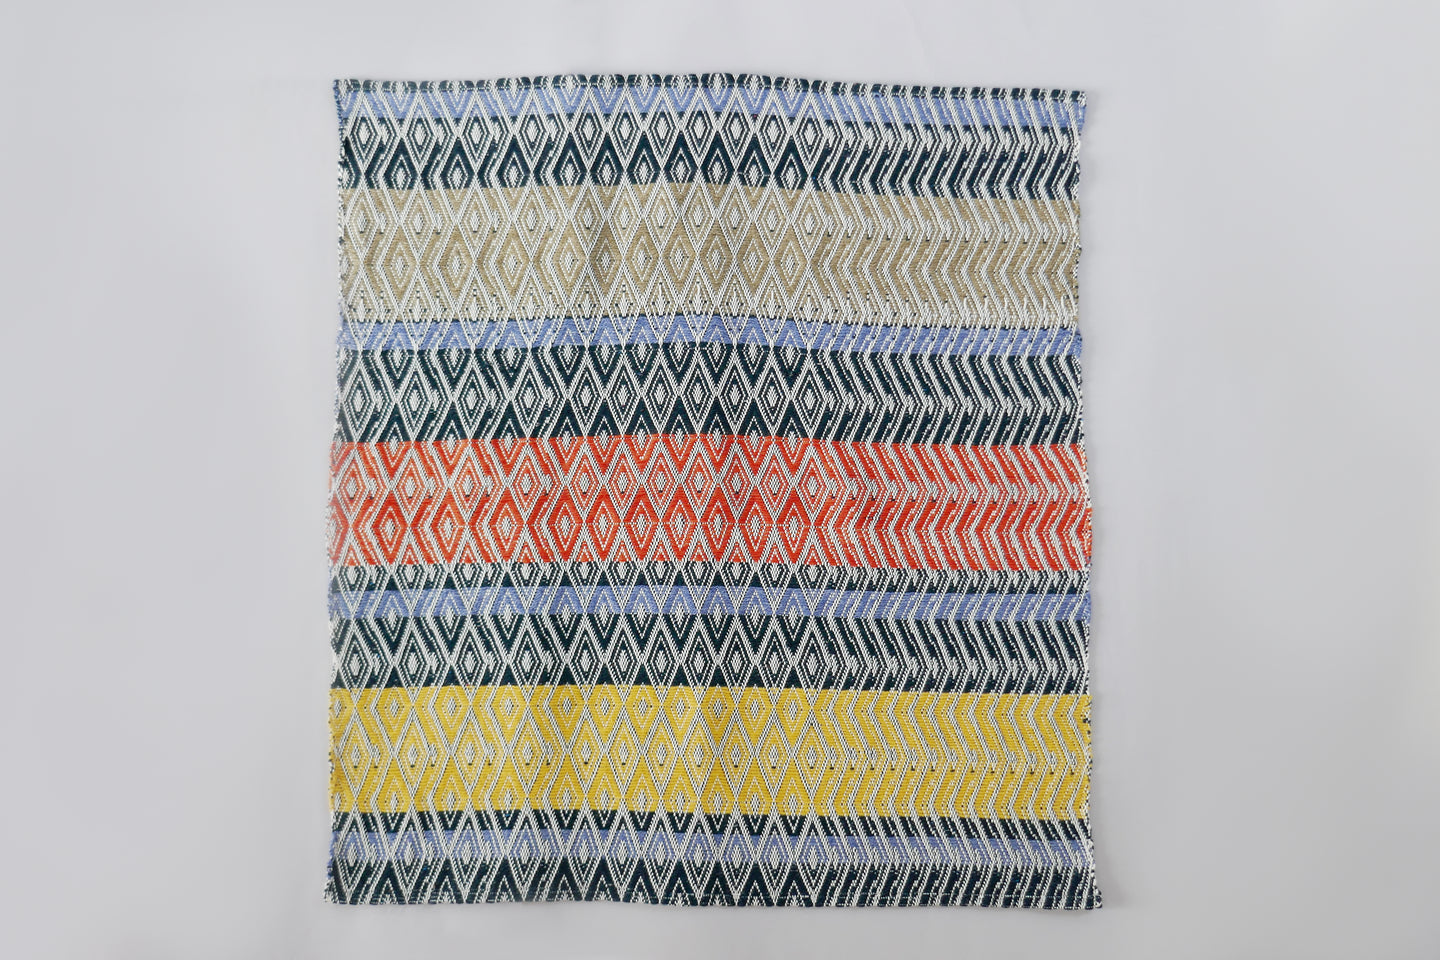 Handwoven baby blanket by Whelan's Weaving